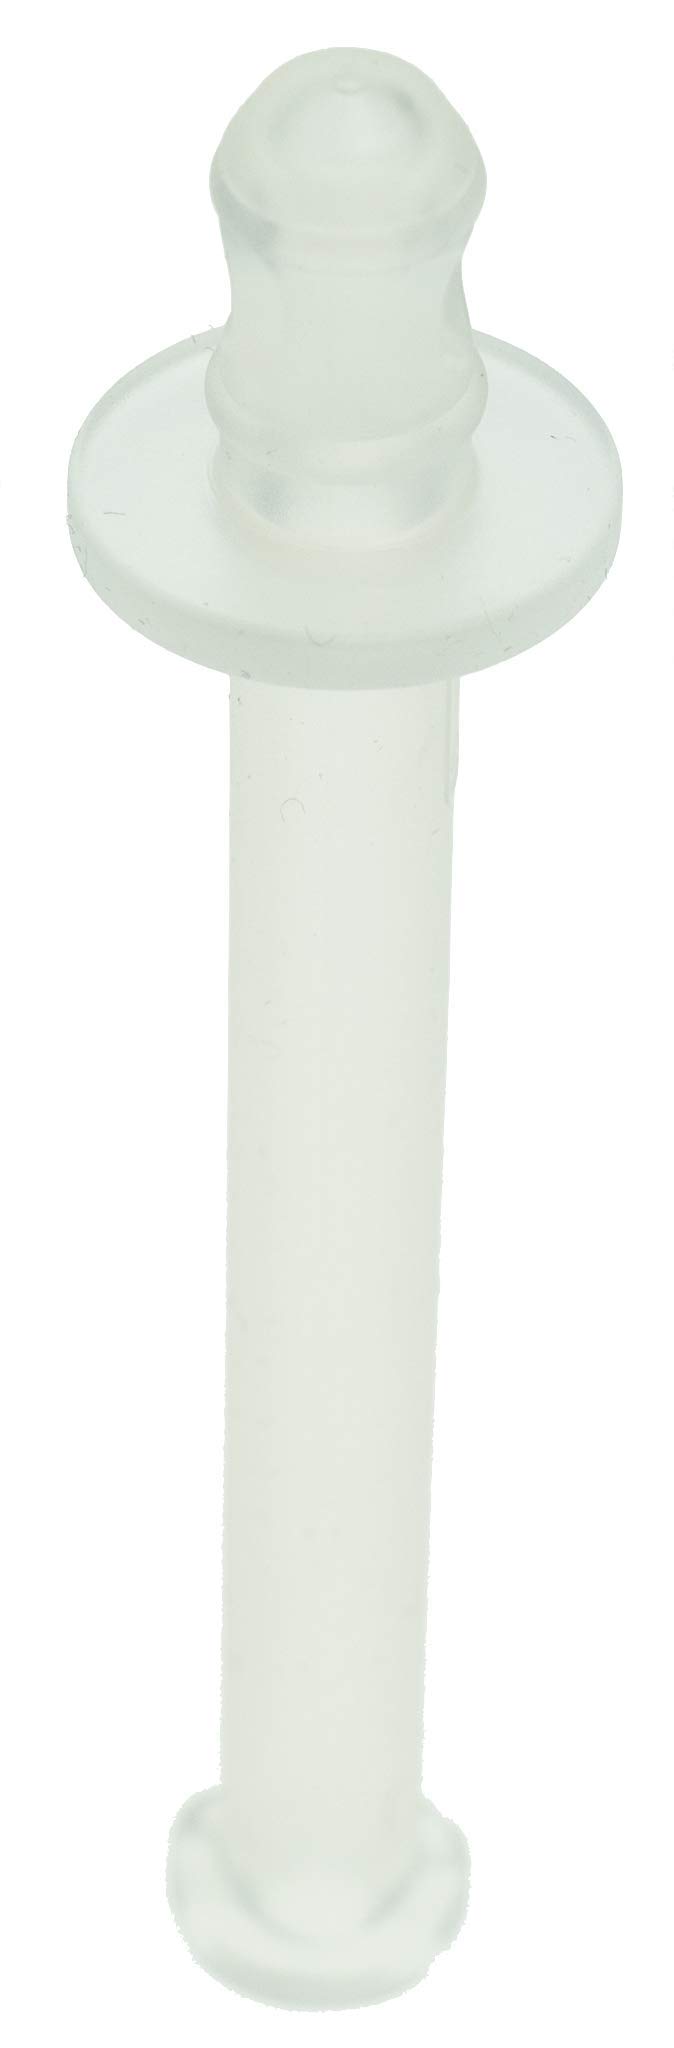 Milk Tube Pipe Replacement Suitable for DeLonghi Nespresso Lattissima One EN500 Aspiration Tube Pipe Milk Suction